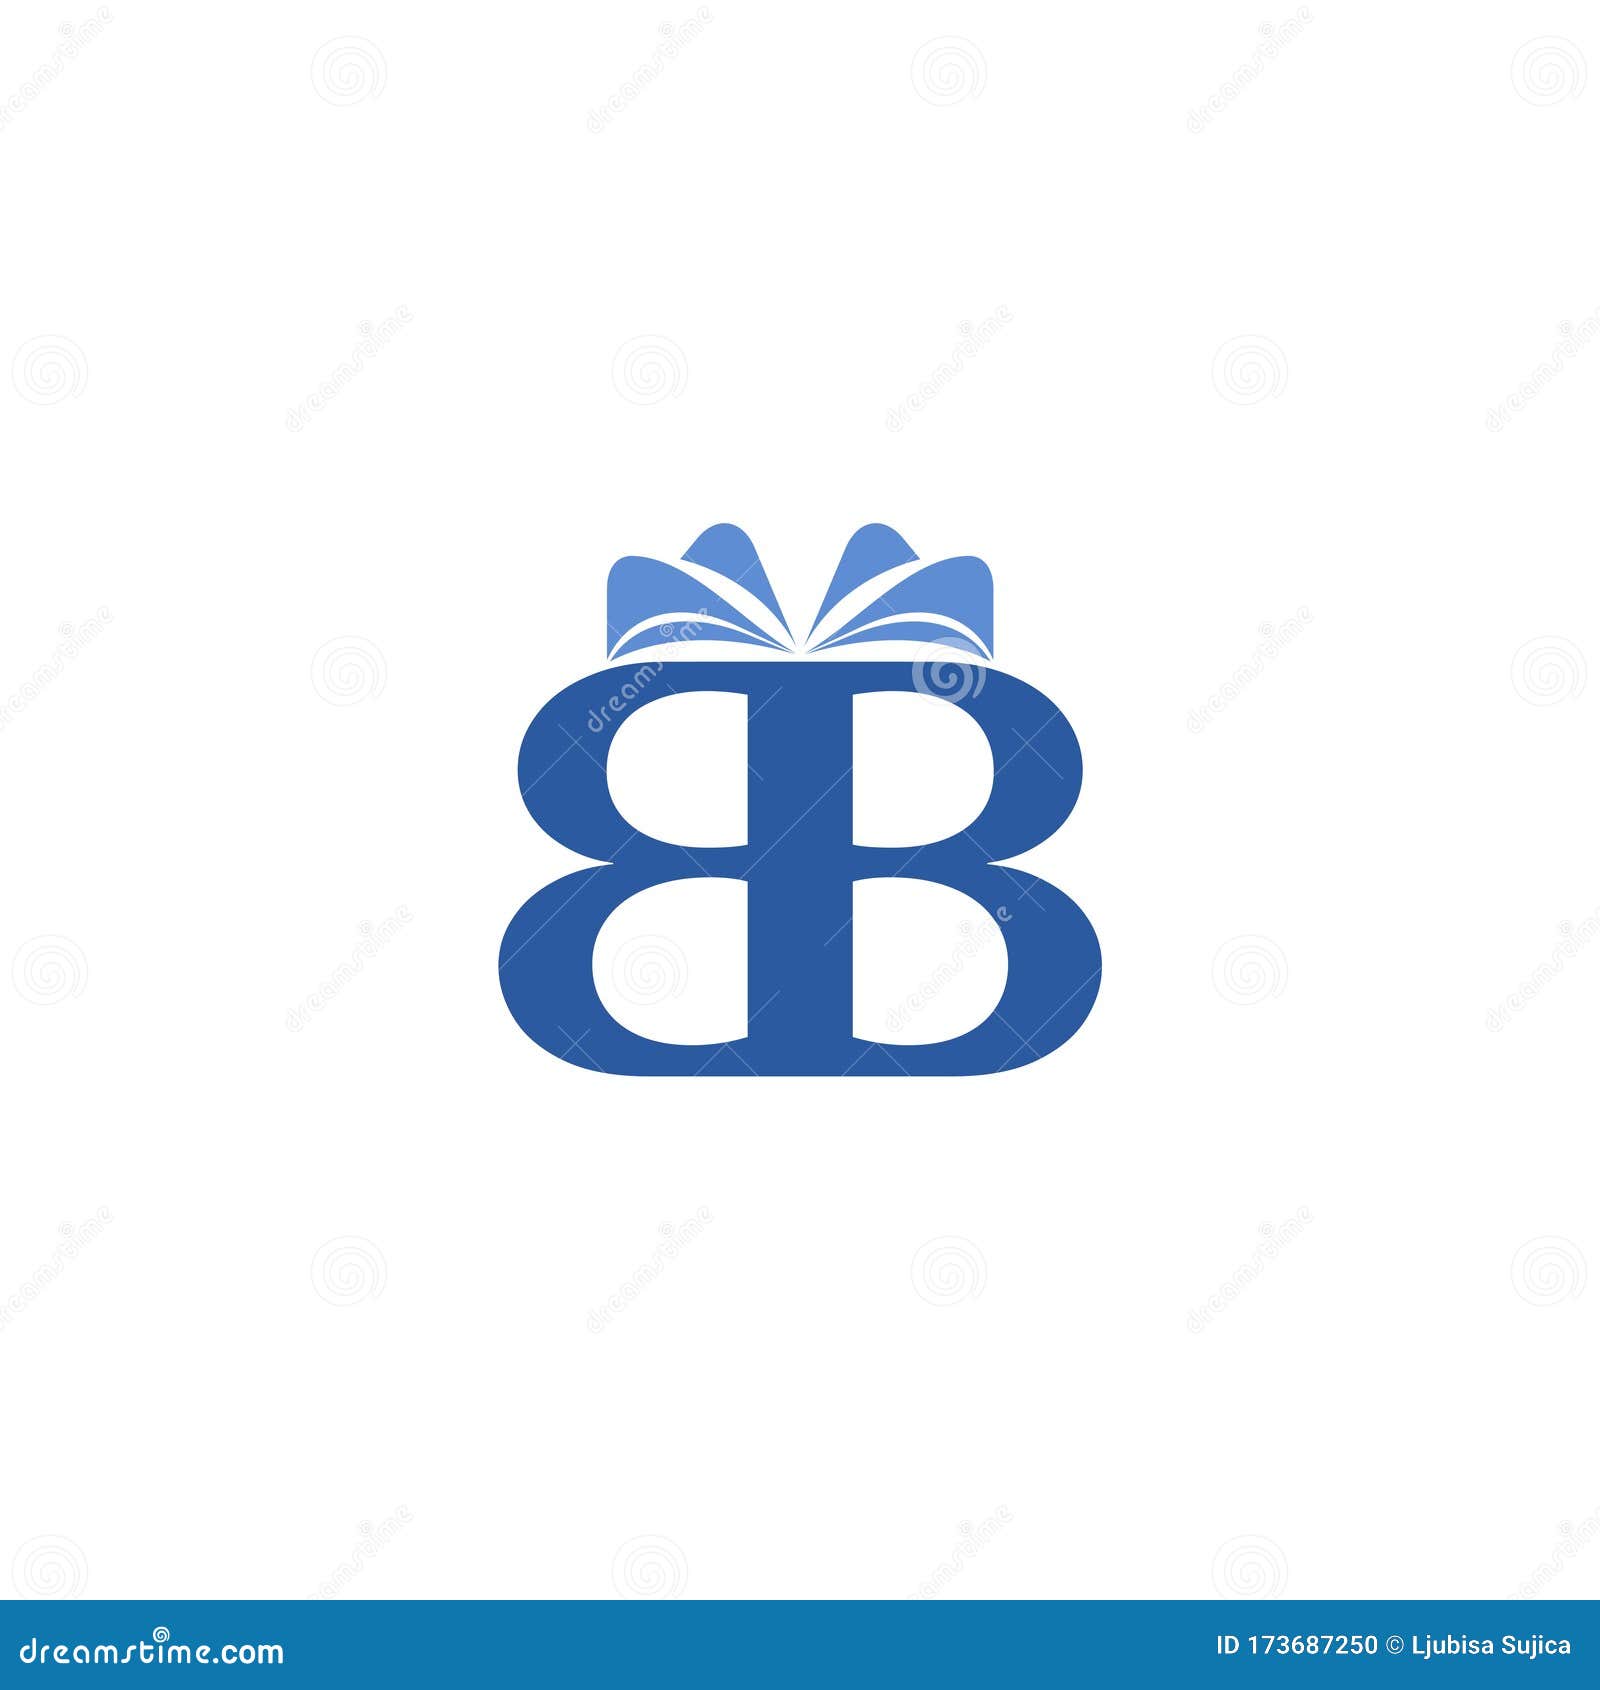 creative Letter EB logo design black and white logo elements. simple letter  EB letter logo,Business corporate letter EB logo design vector Stock Vector  Image & Art - Alamy